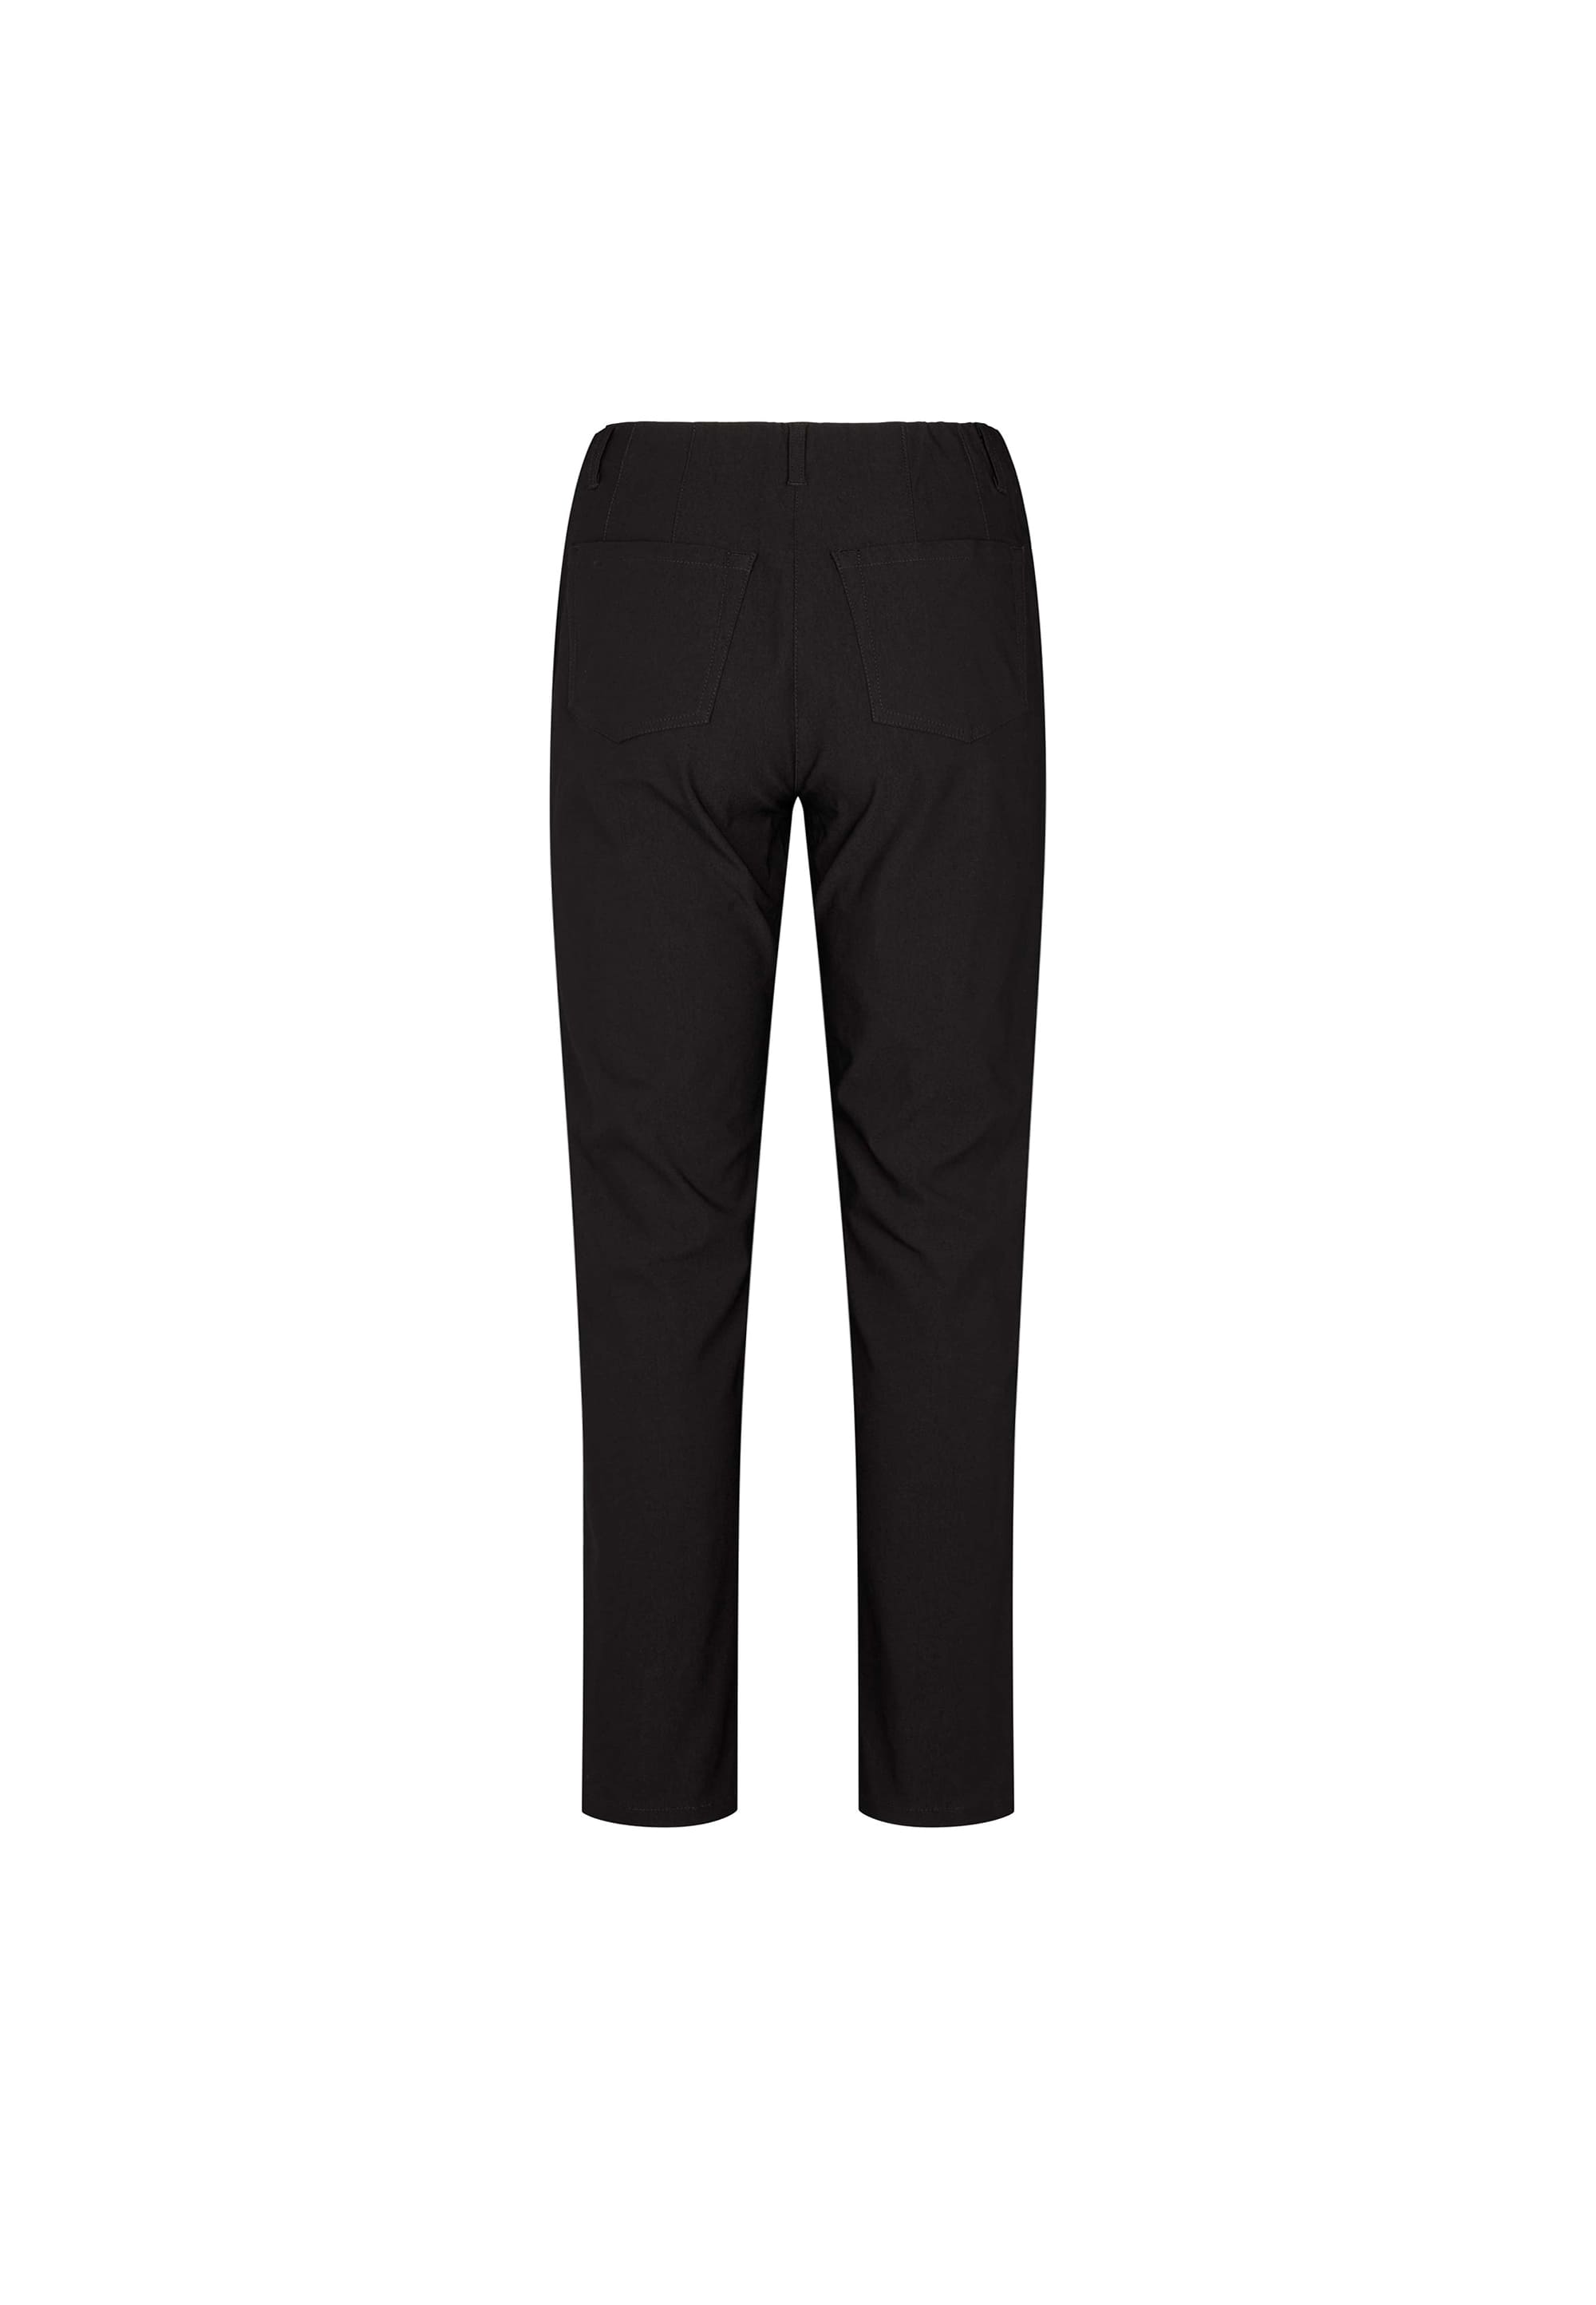 LAURIE Rylie Pocket Regular - Medium Length Trousers REGULAR Schwarz